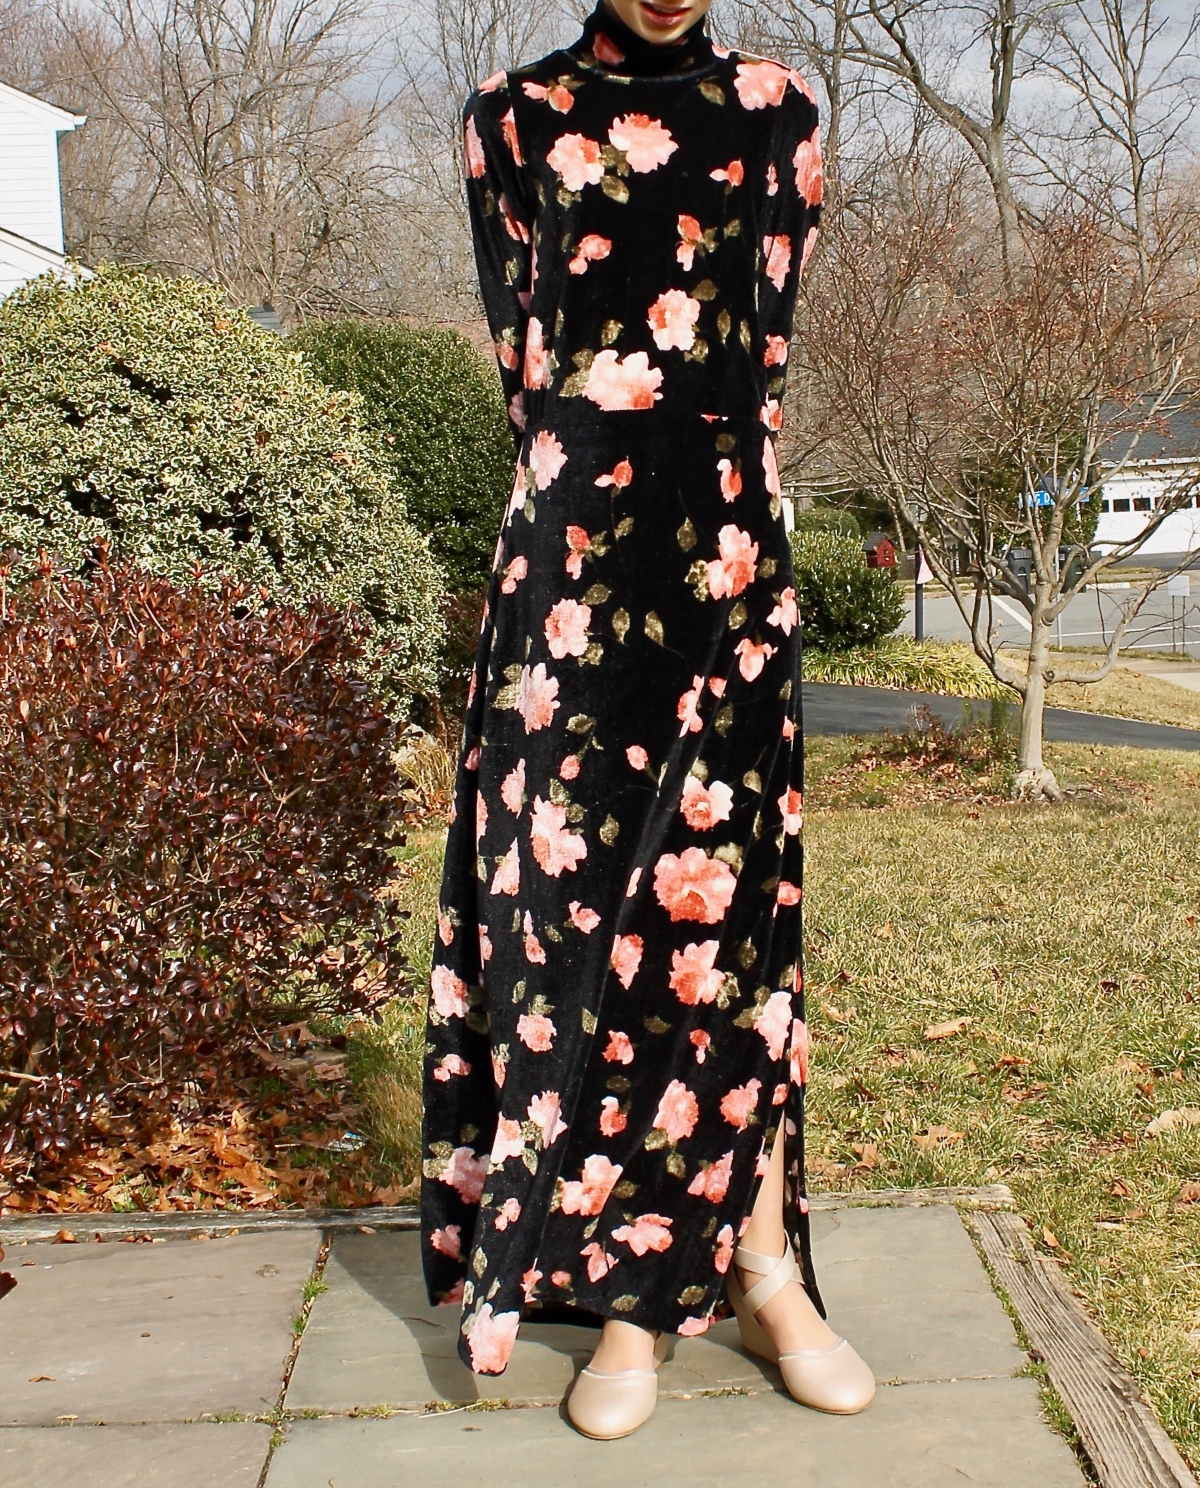 How to Wear a Plus Size Velvet Dress - Expert Blogger